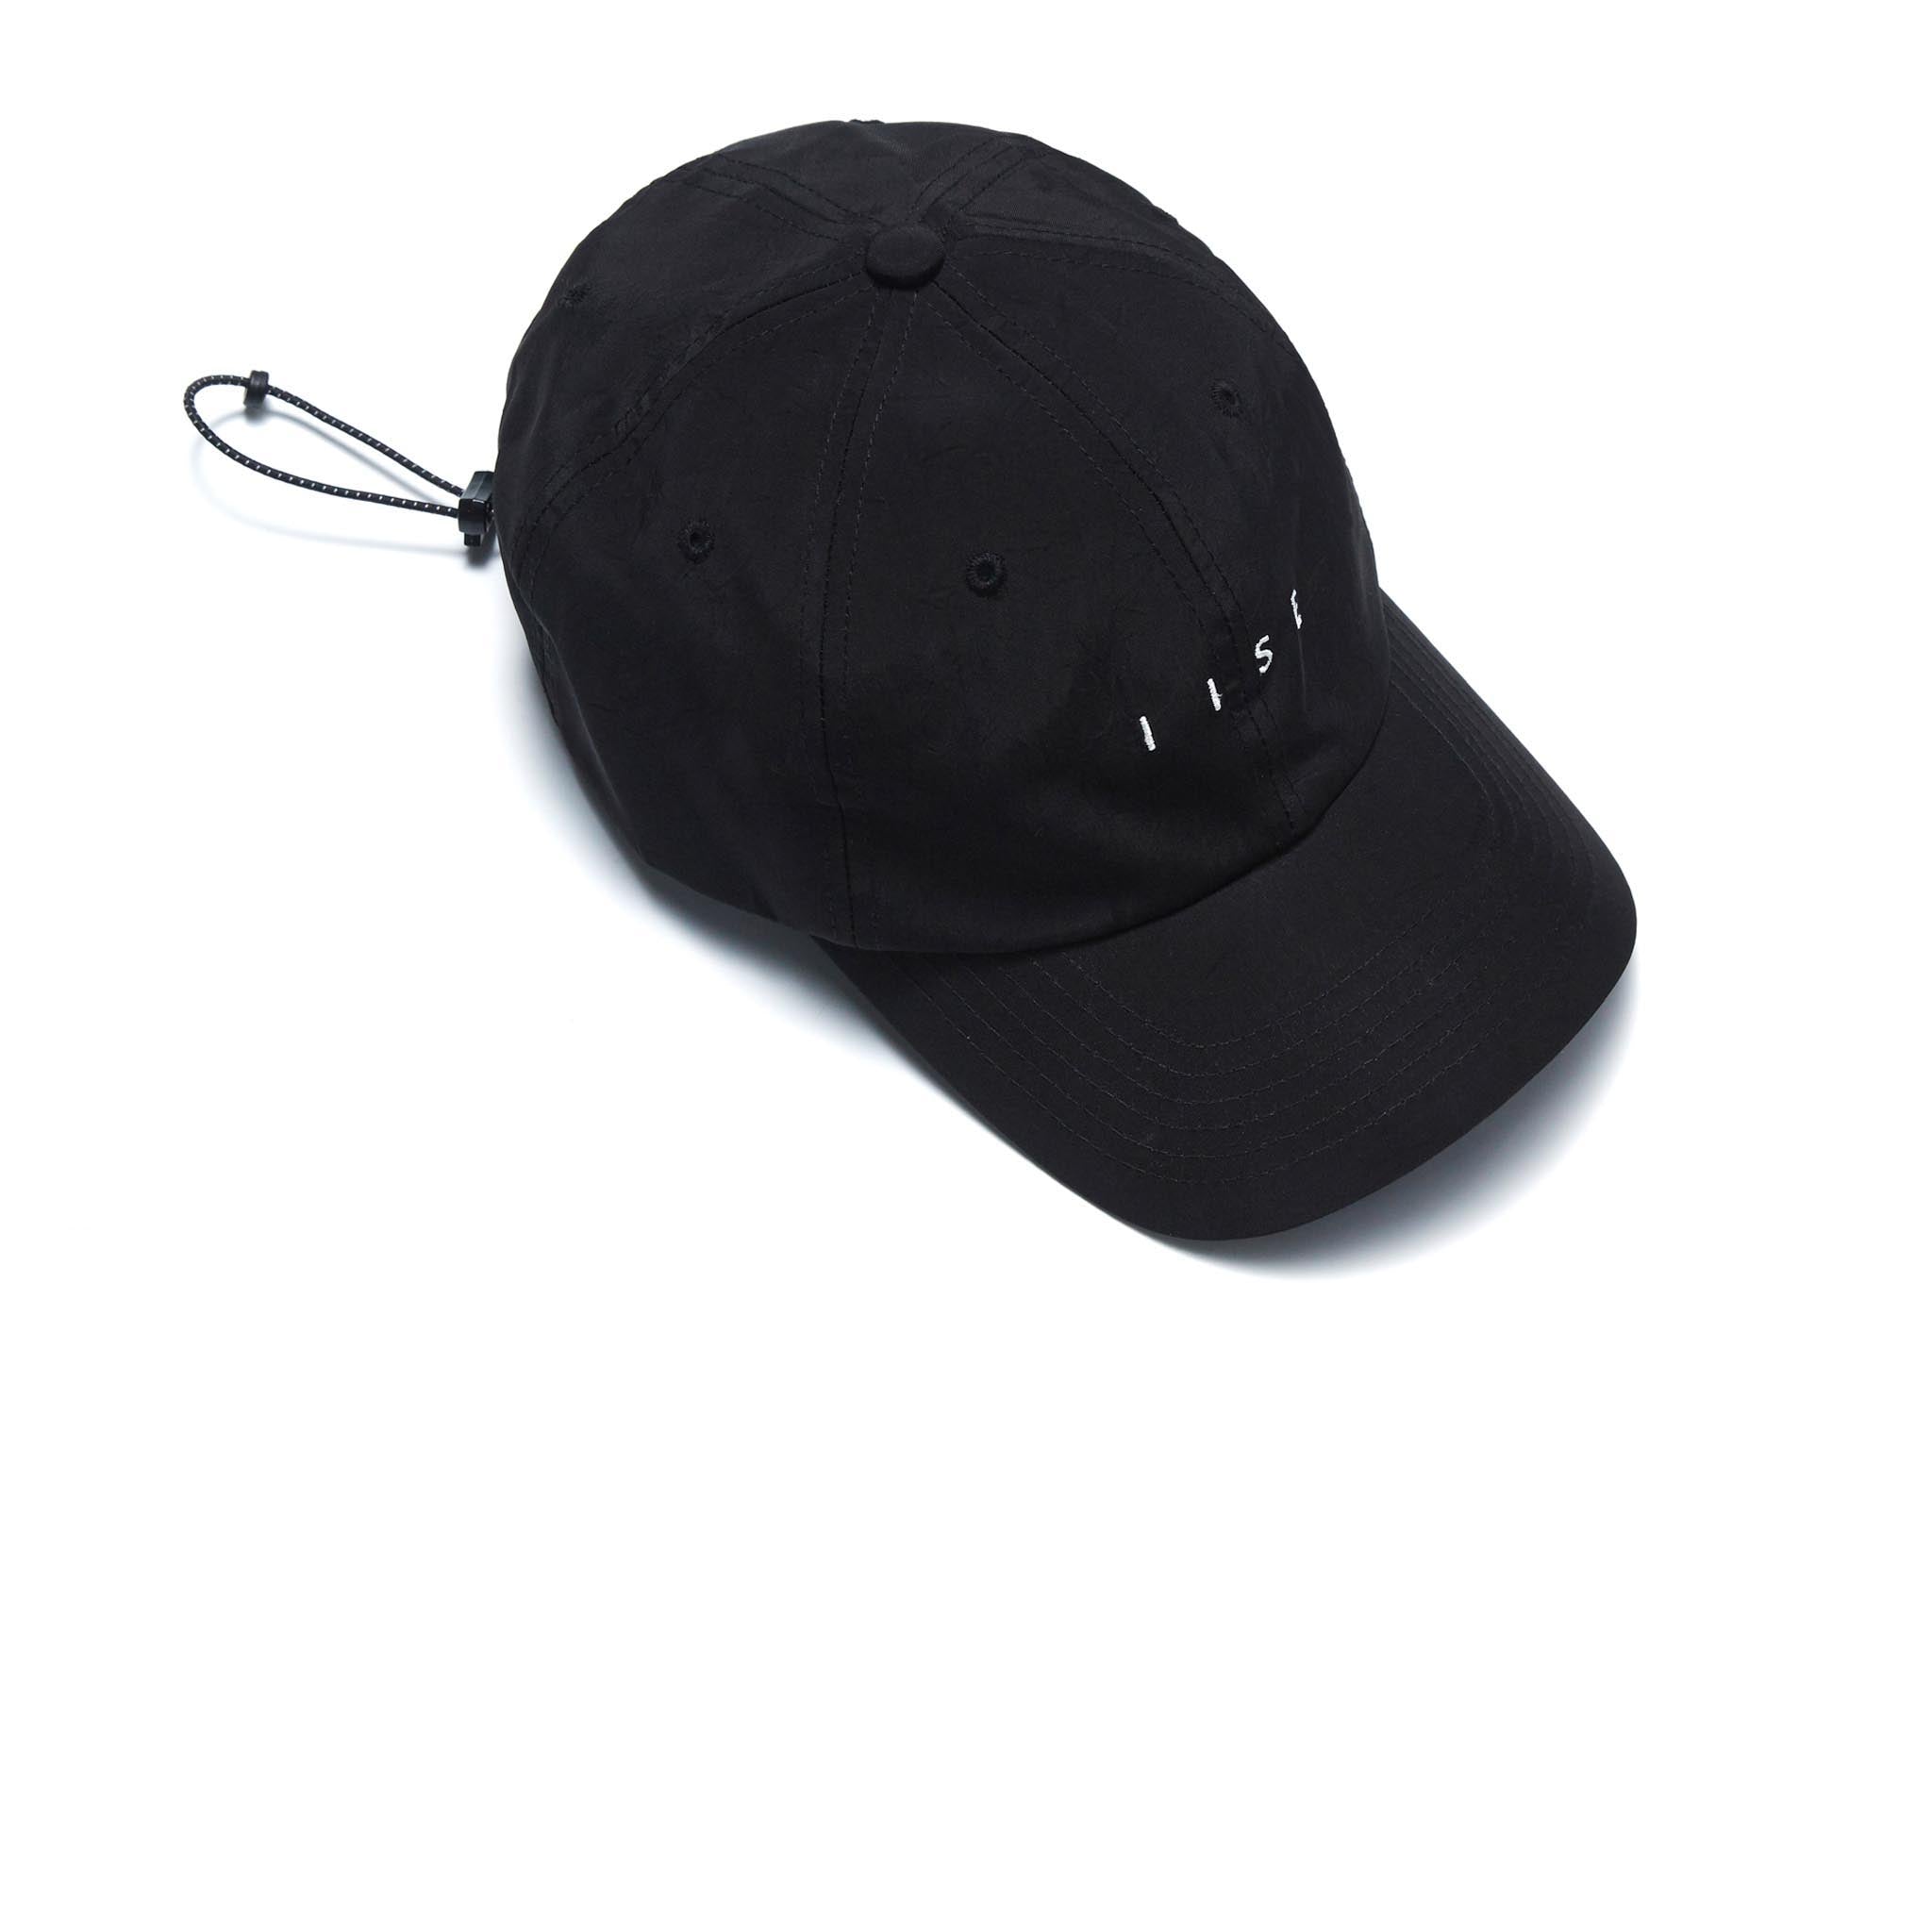 IISE D-Ring Cap Black